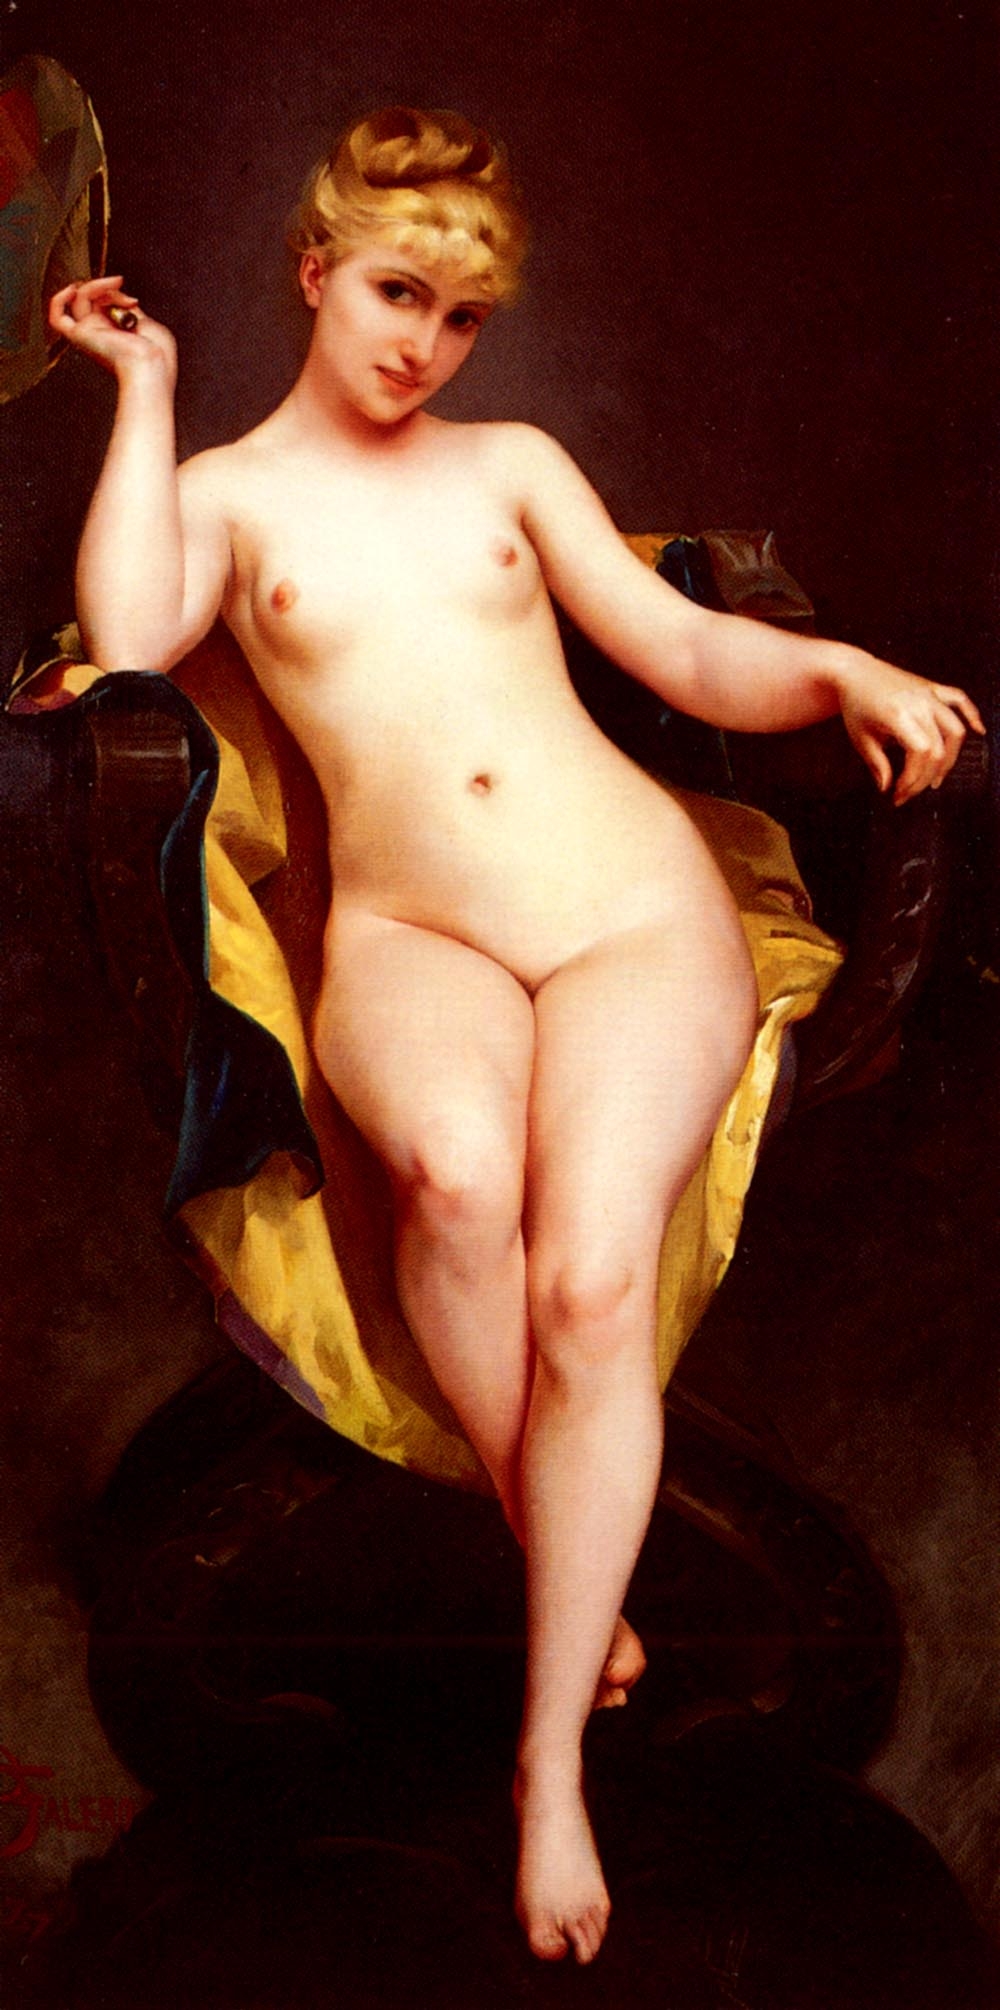 Erotic Art Collector 0319 LUIS RICARDO FALERO 1851-1896 12